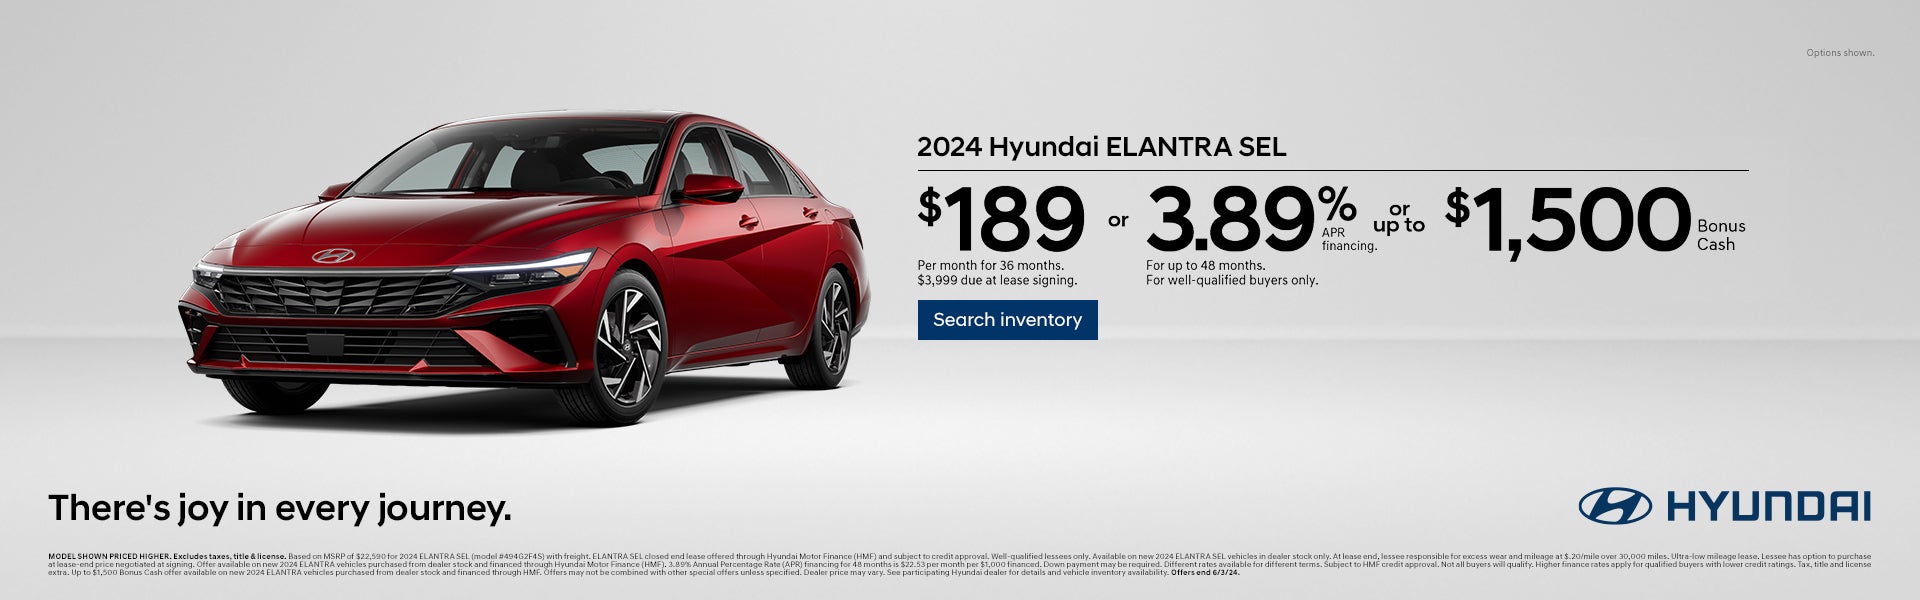 Hyundai Elantra Offer